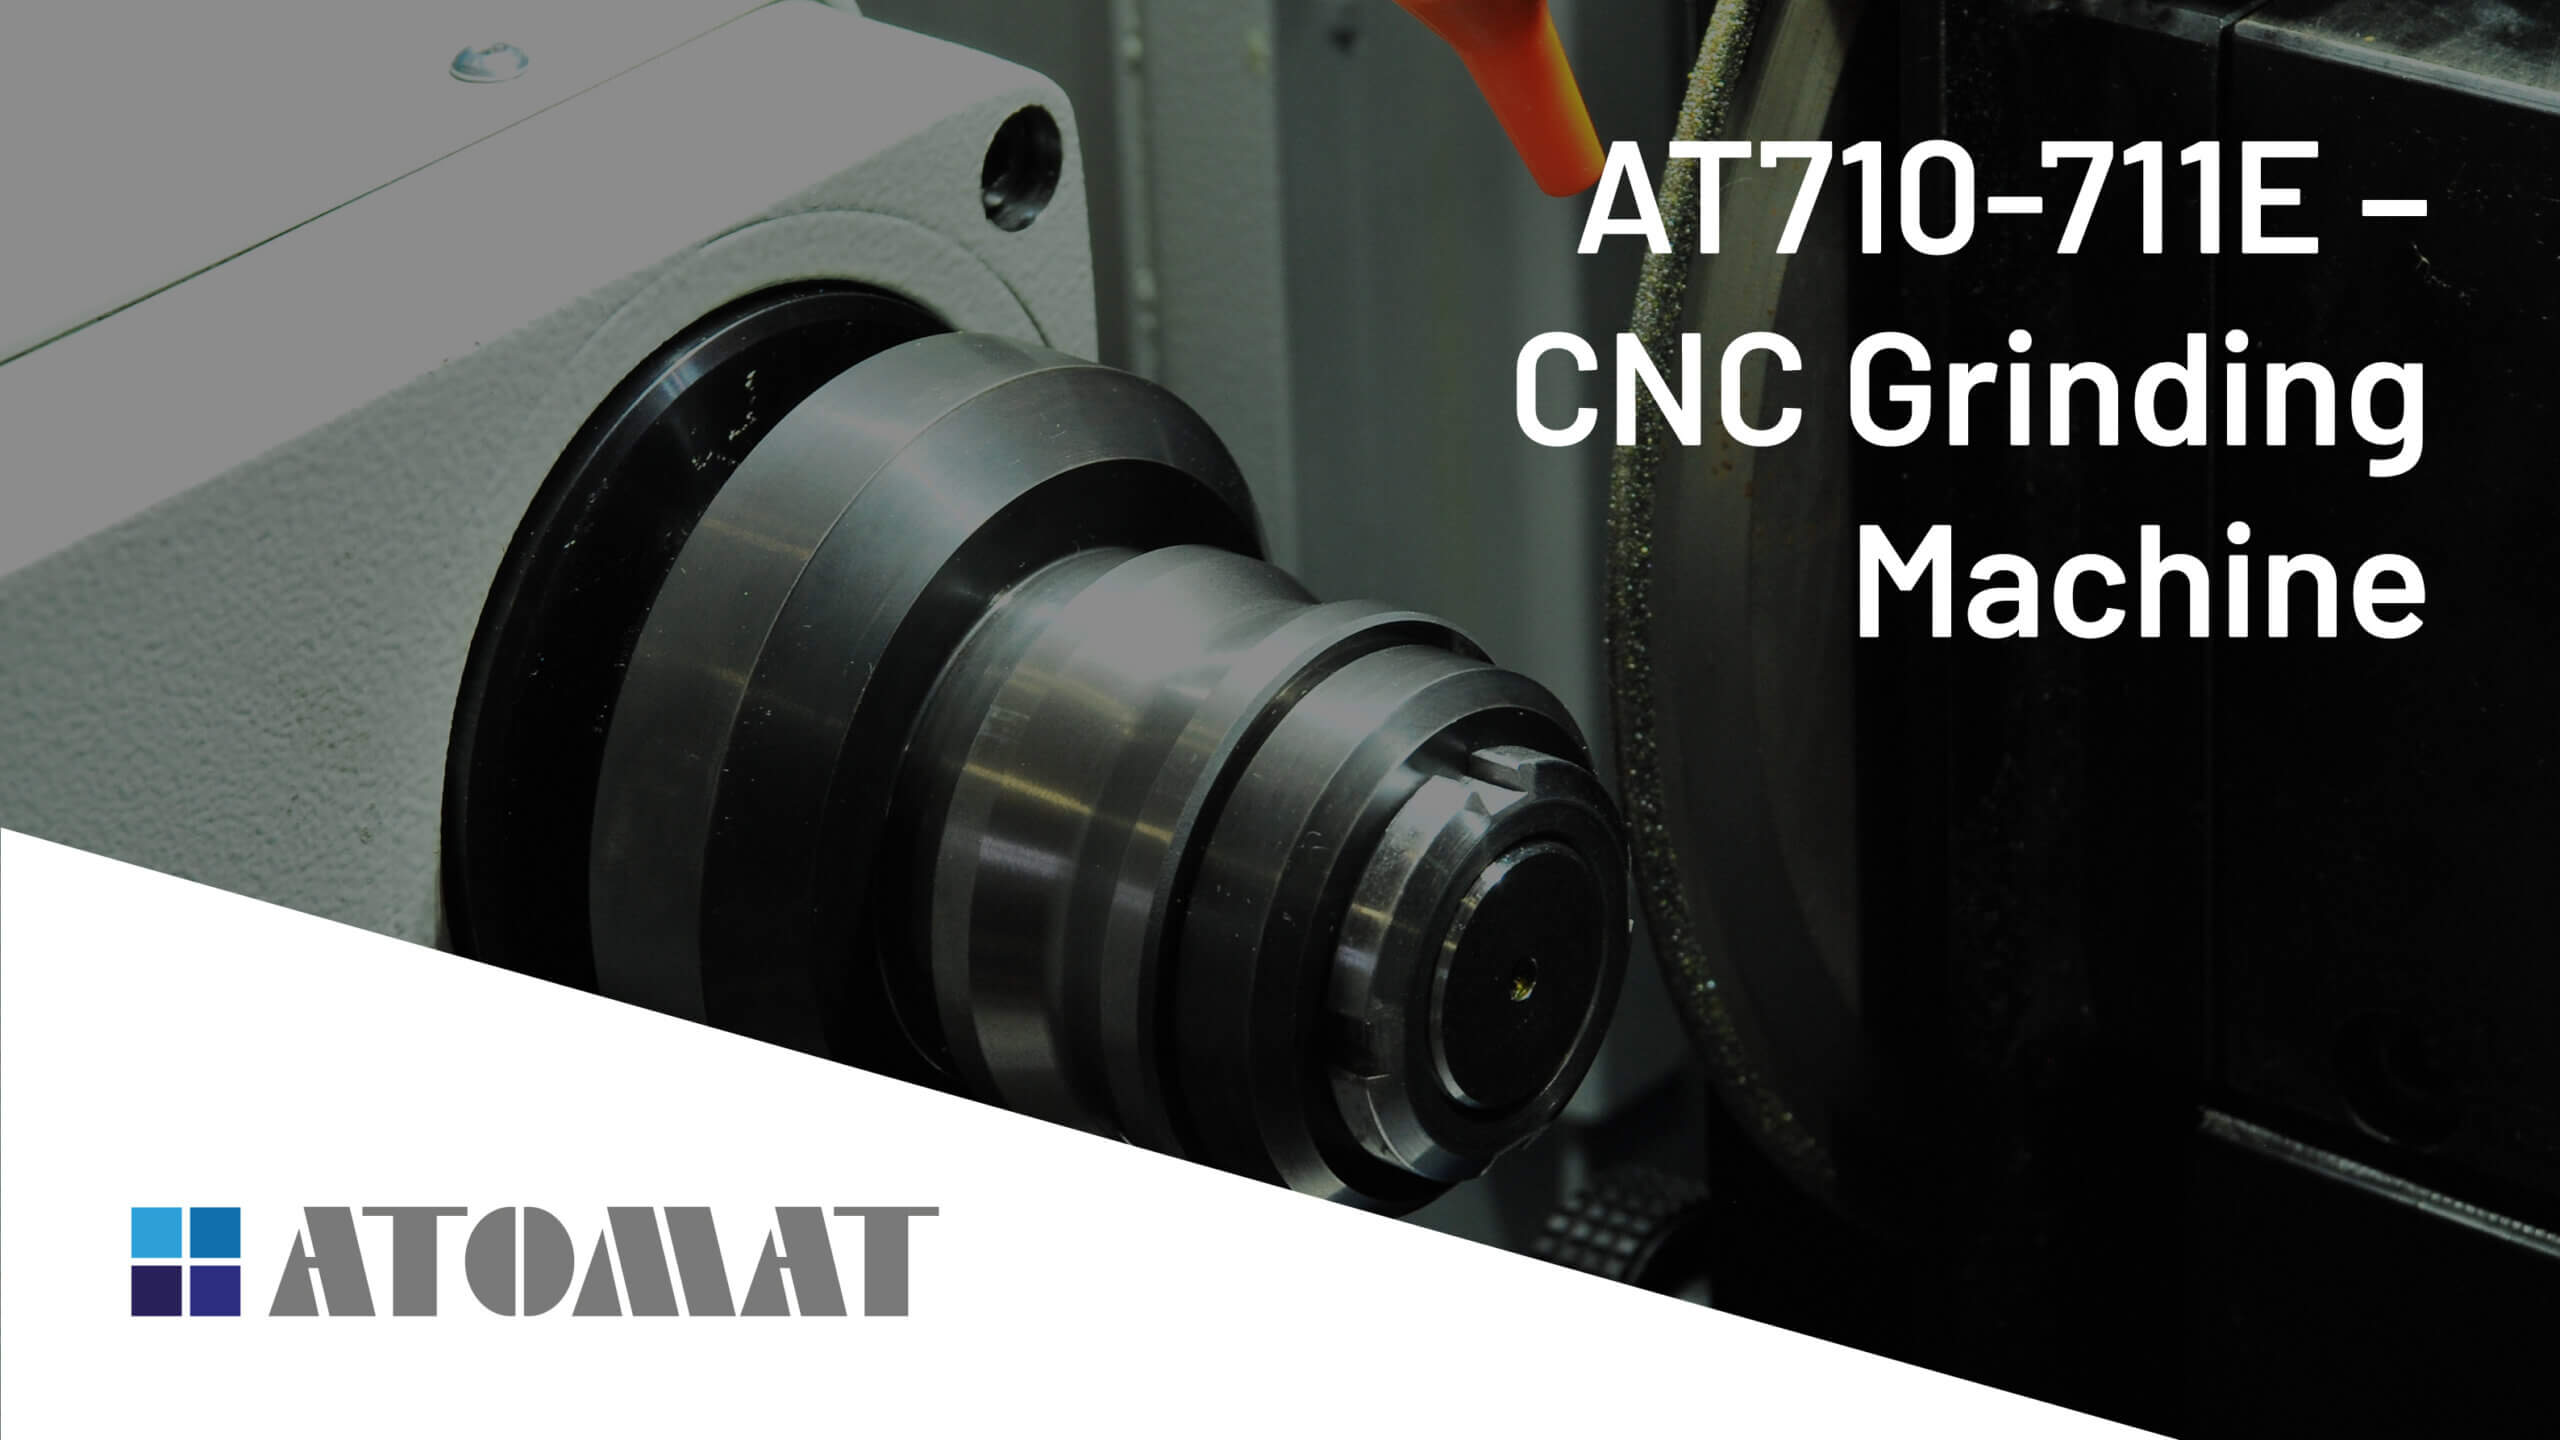 Atomat Spa - AT710-711E - CNC Grinding Machine